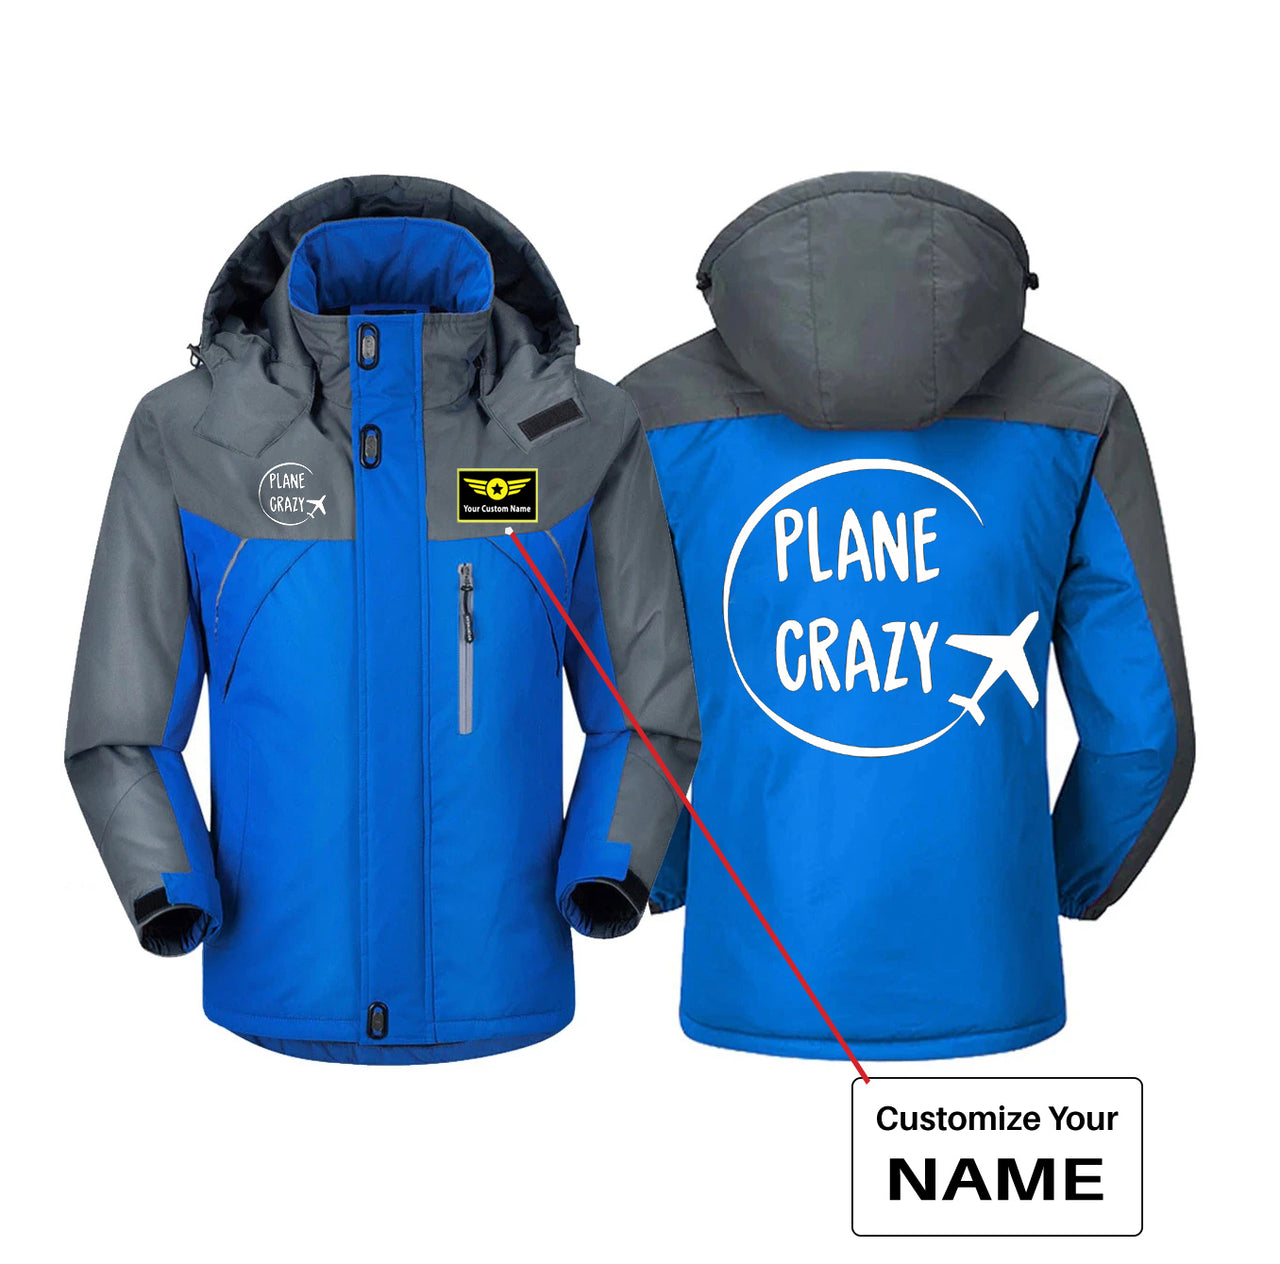 Plane Crazy Designed Thick Winter Jackets